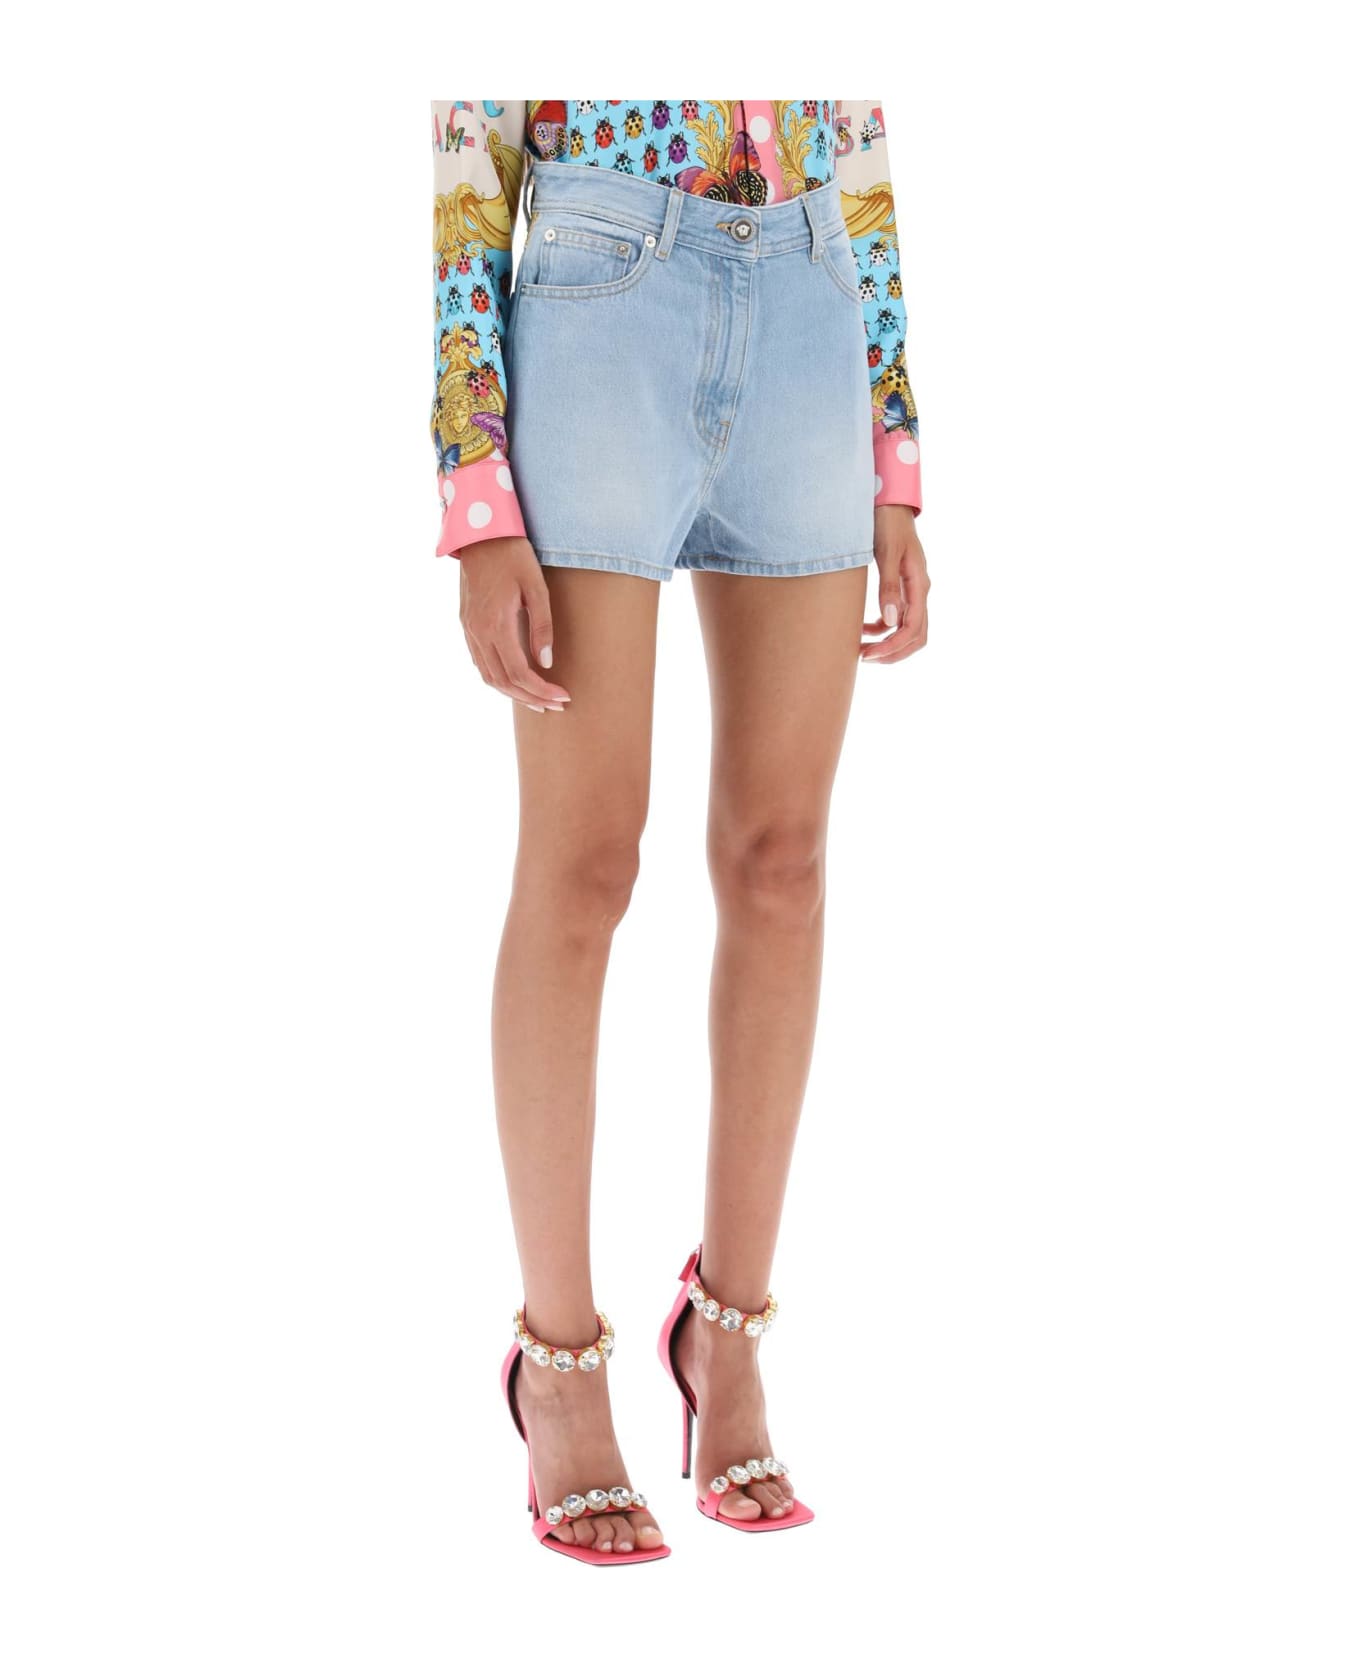 Versace Butterflies & Ladybugs Denim Shorts - BLUE MULTICOLOR (Blue) ショートパンツ